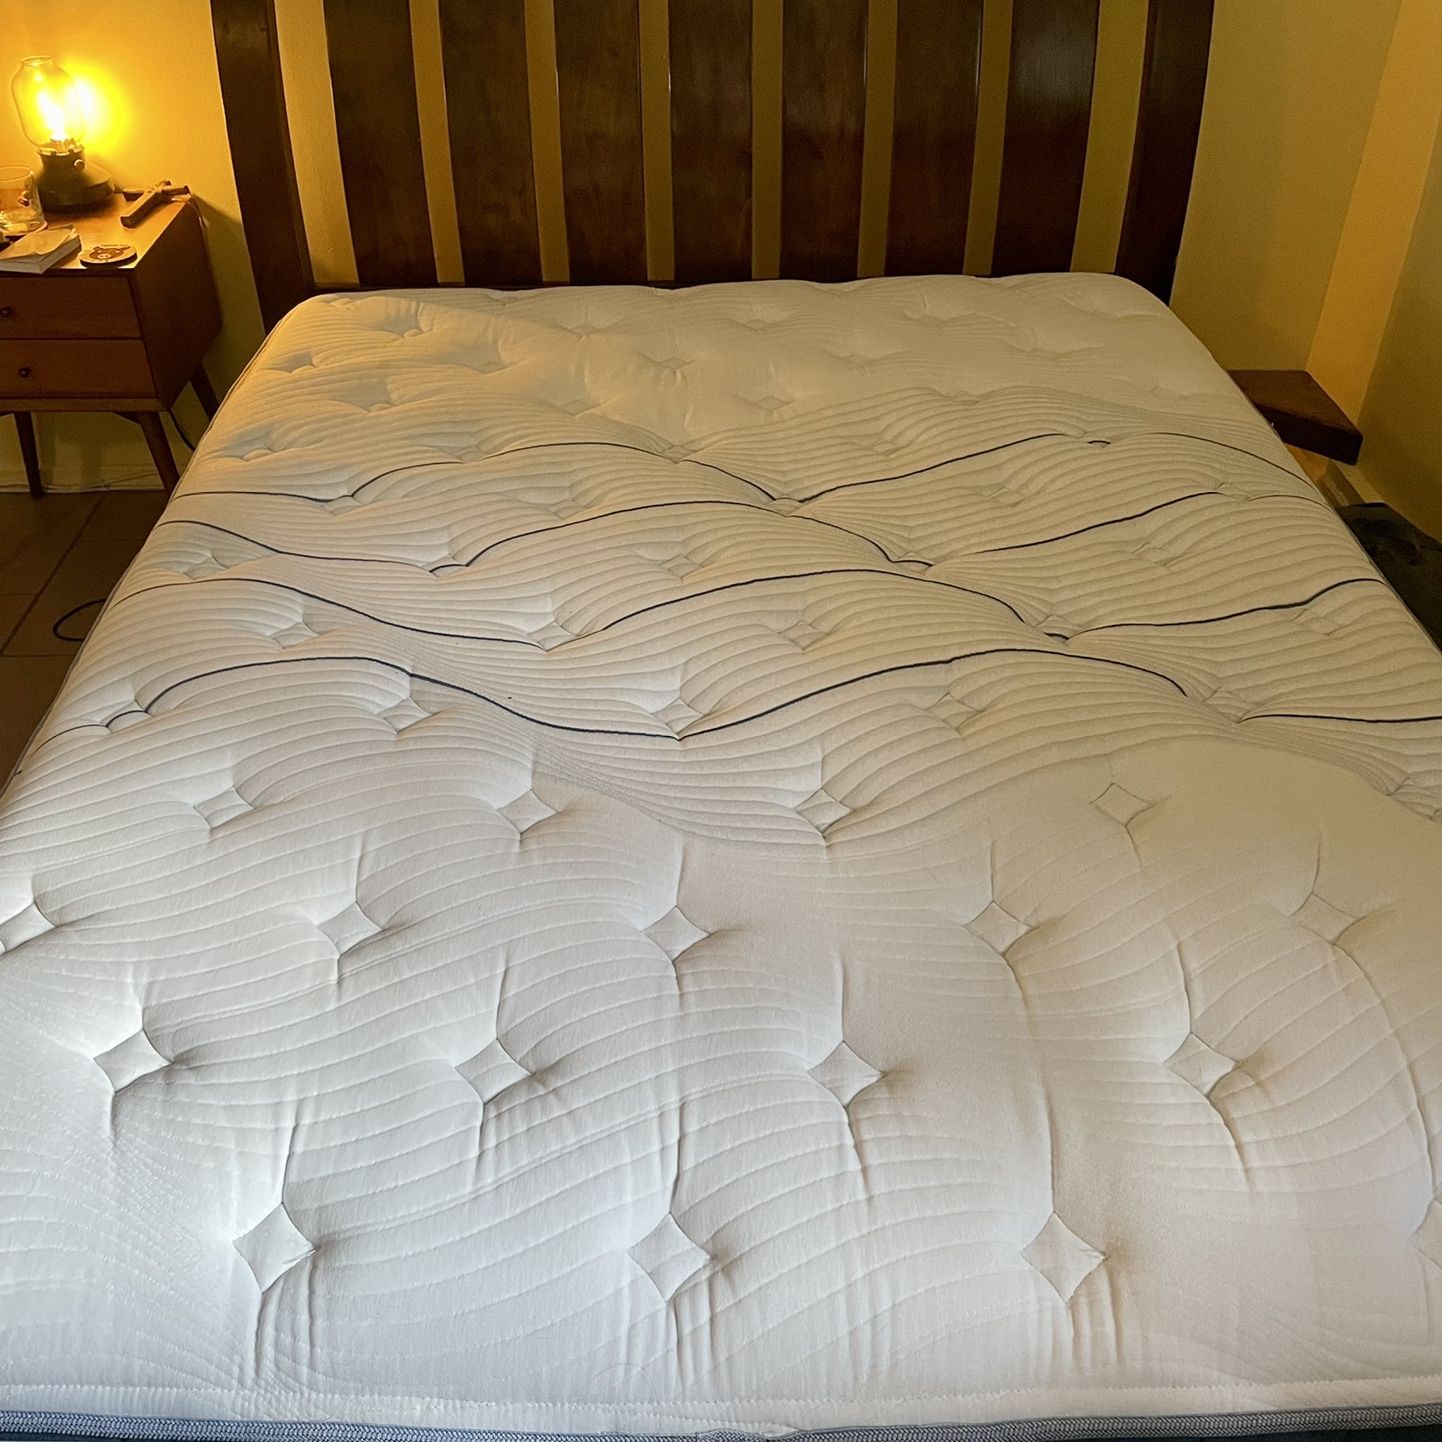 Bear mattress Queen size medium firm elite hybrid for sale excellent shape